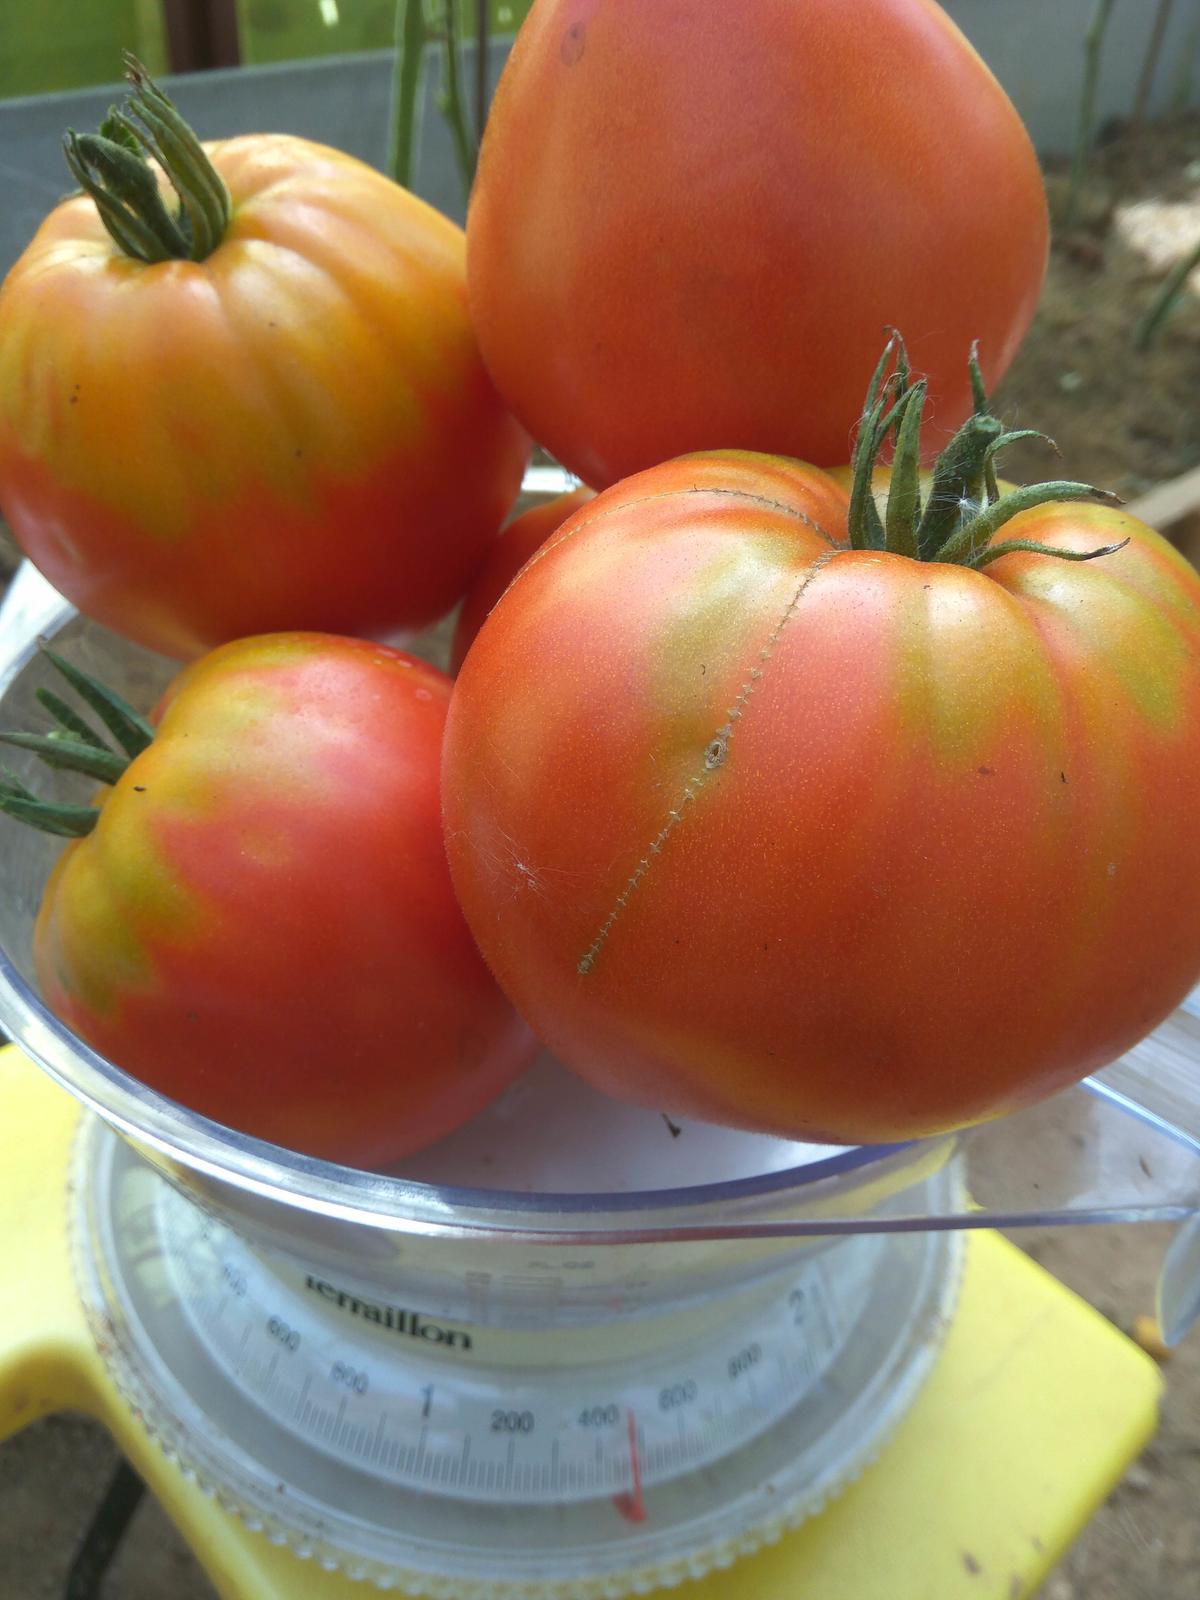 помидоры пузата хата фото